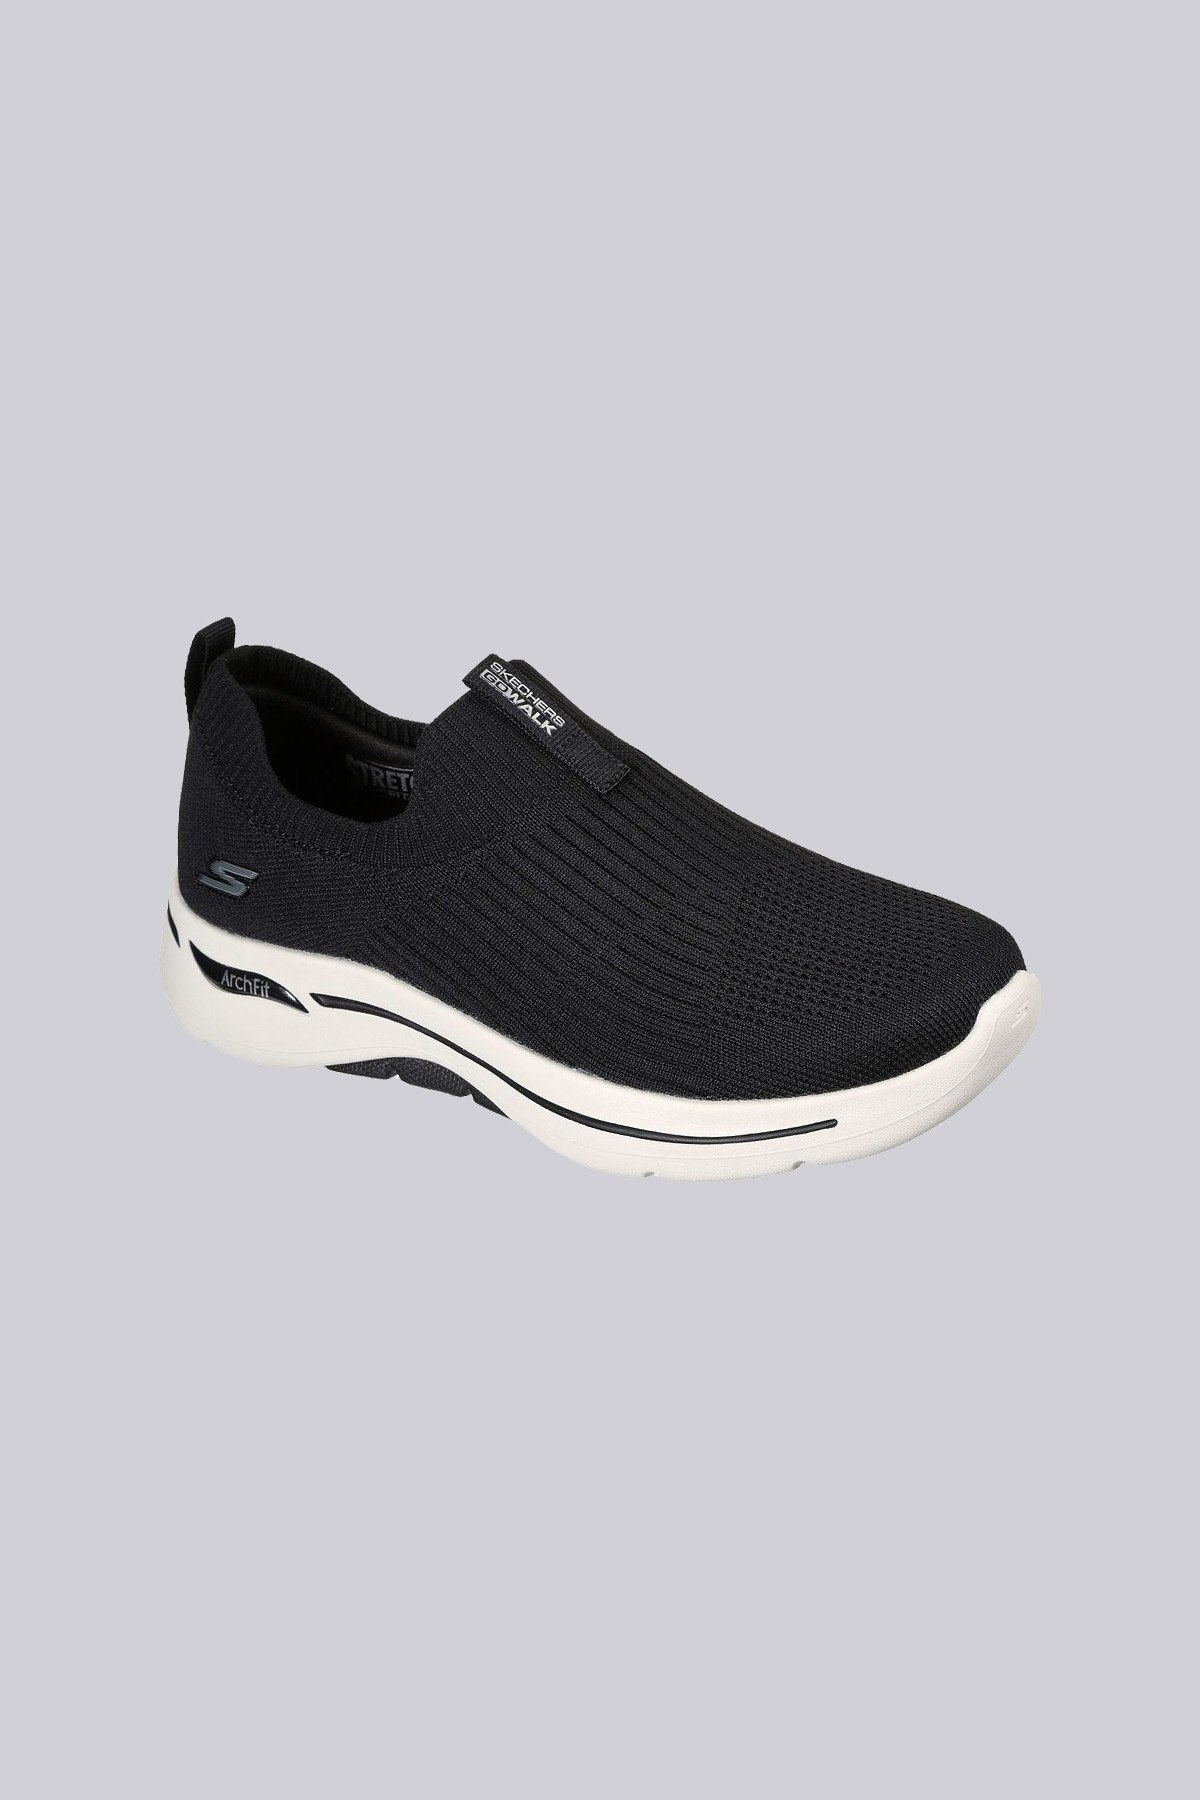 https://www.liquidyachtwear.com/wp-content/uploads/2022/06/Skechers-Ladies-GO-Walk-Arch-Fit-Iconic-Slip-On-black-1.jpg